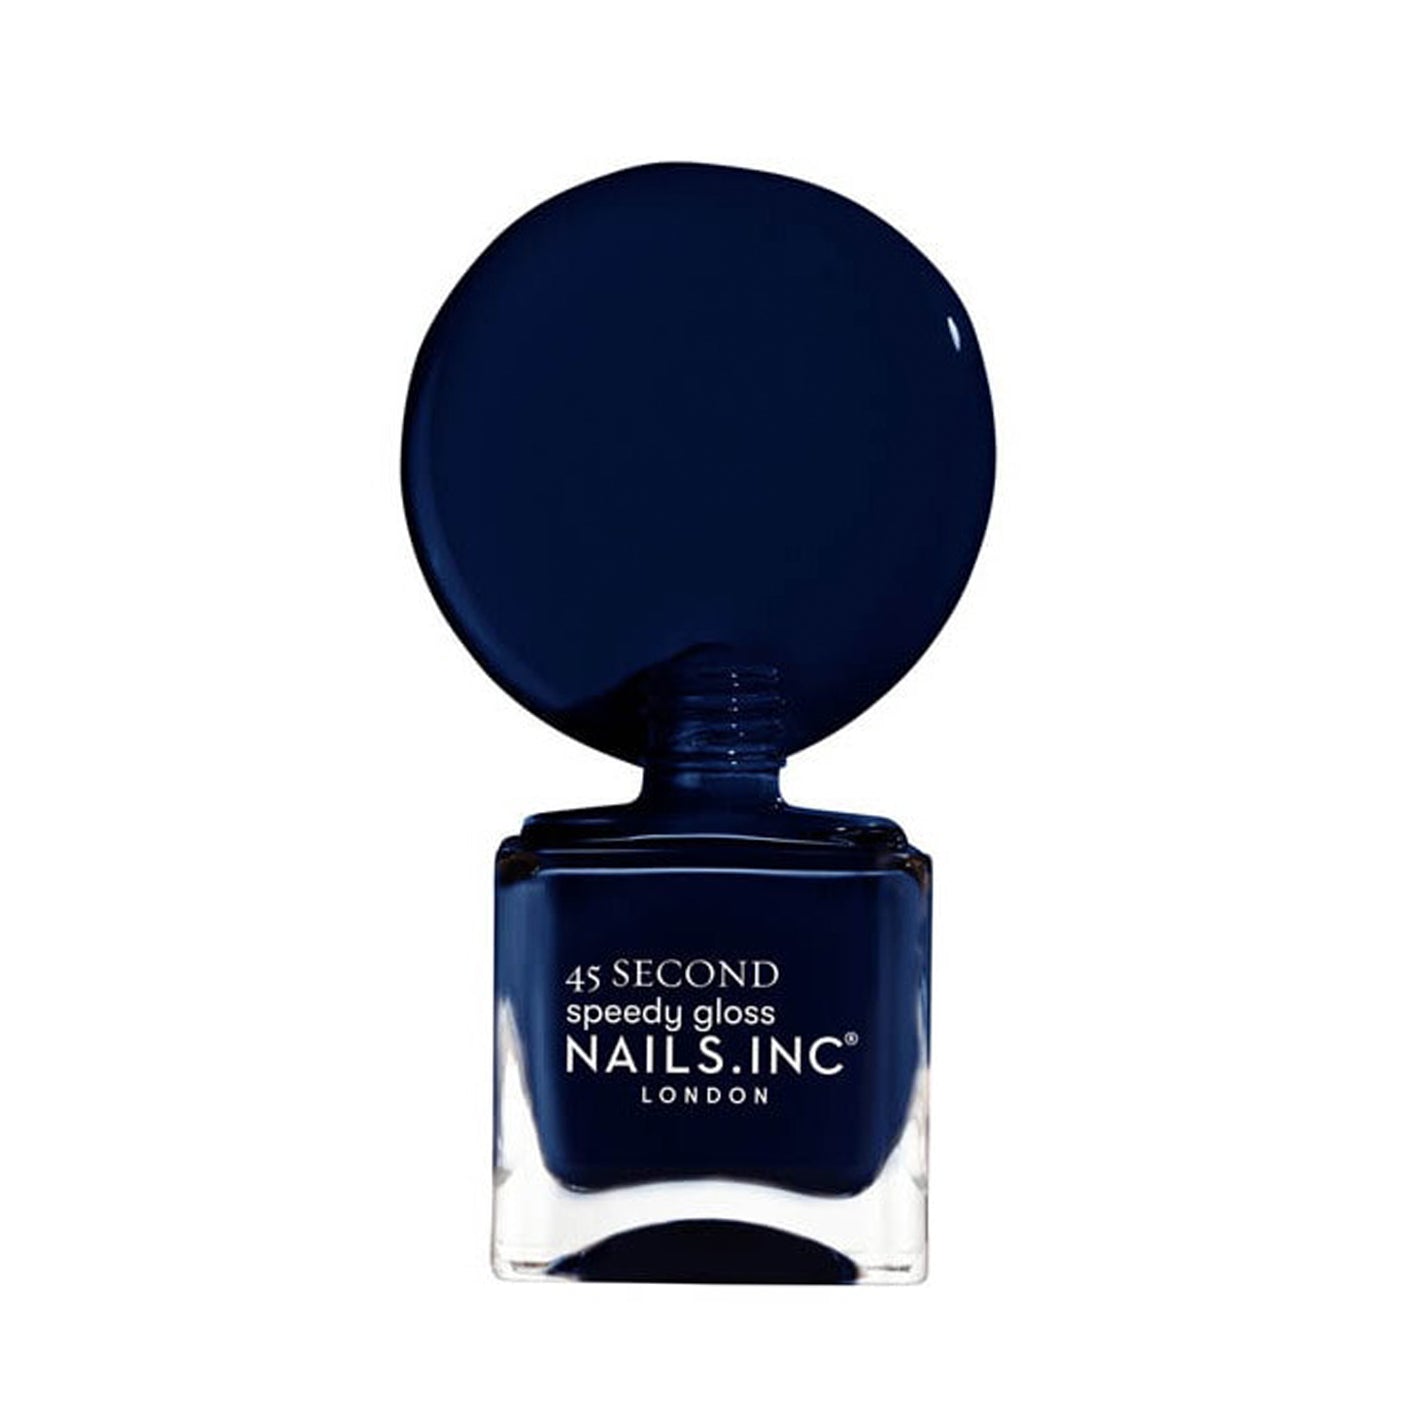 Nails.INC 45 Sec Speedy Gloss - Time For Trafalgar Square